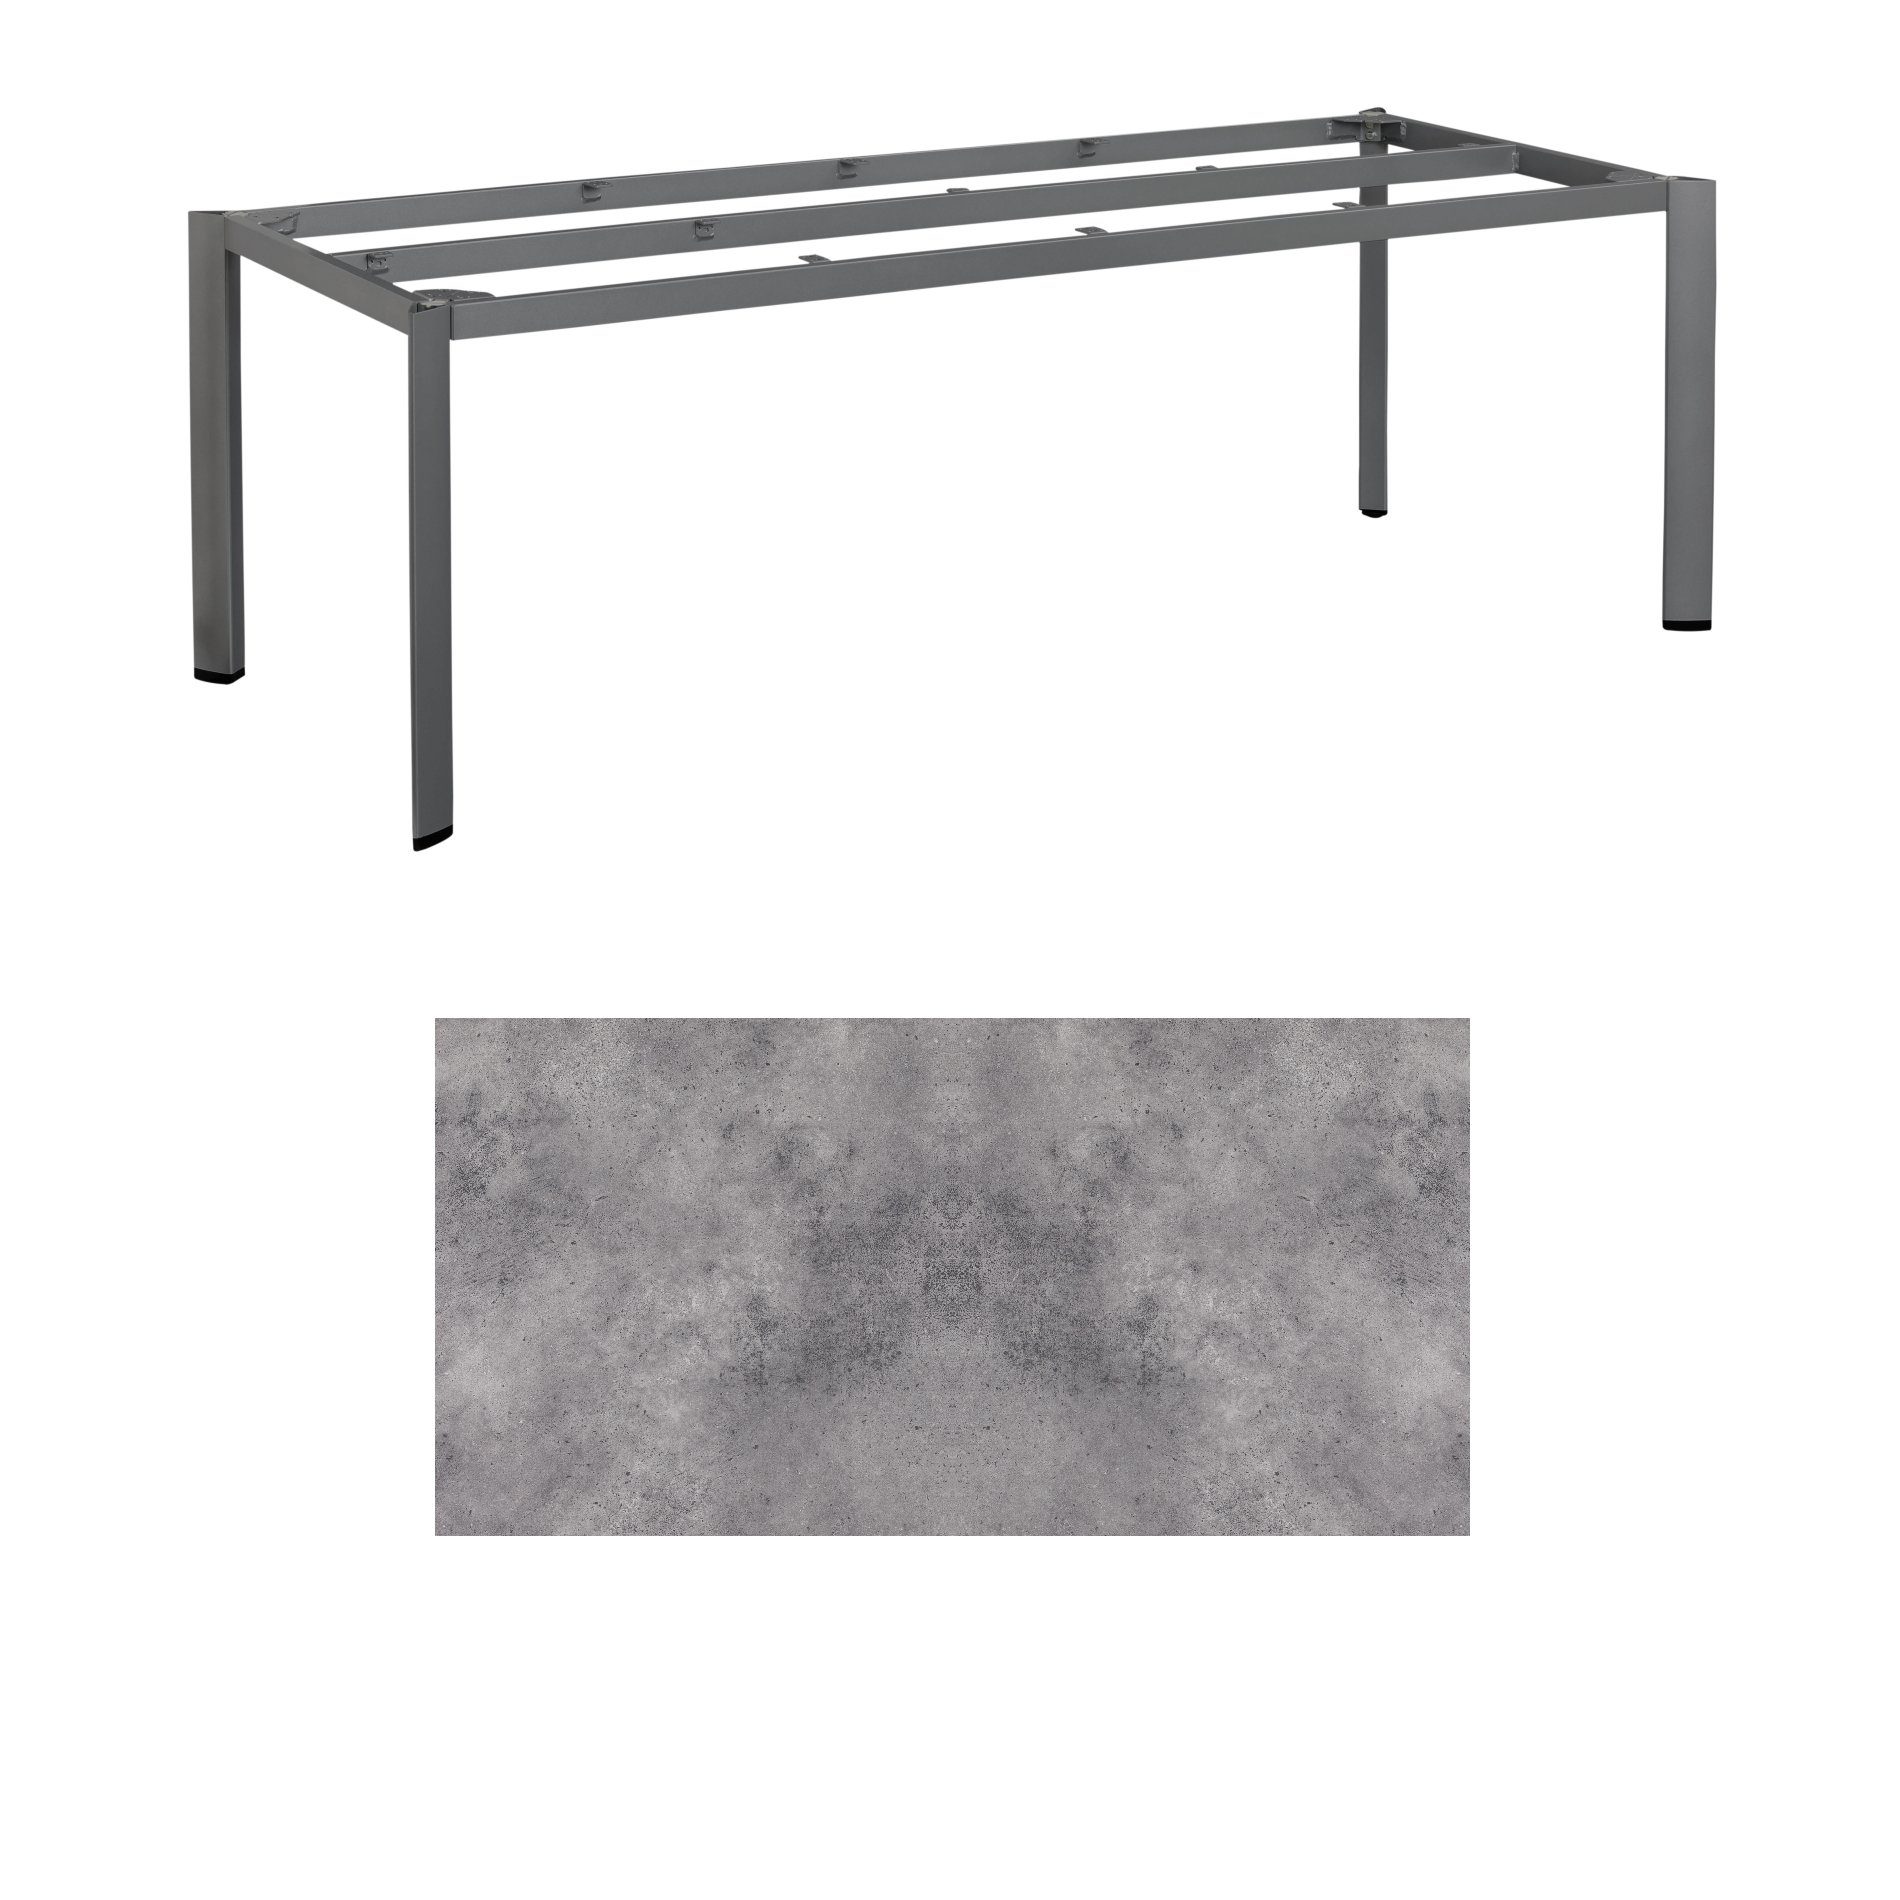 Kettler "Edge" Gartentisch, Gestell Aluminium anthrazit, Tischplatte HPL anthrazit, 220x95 cm